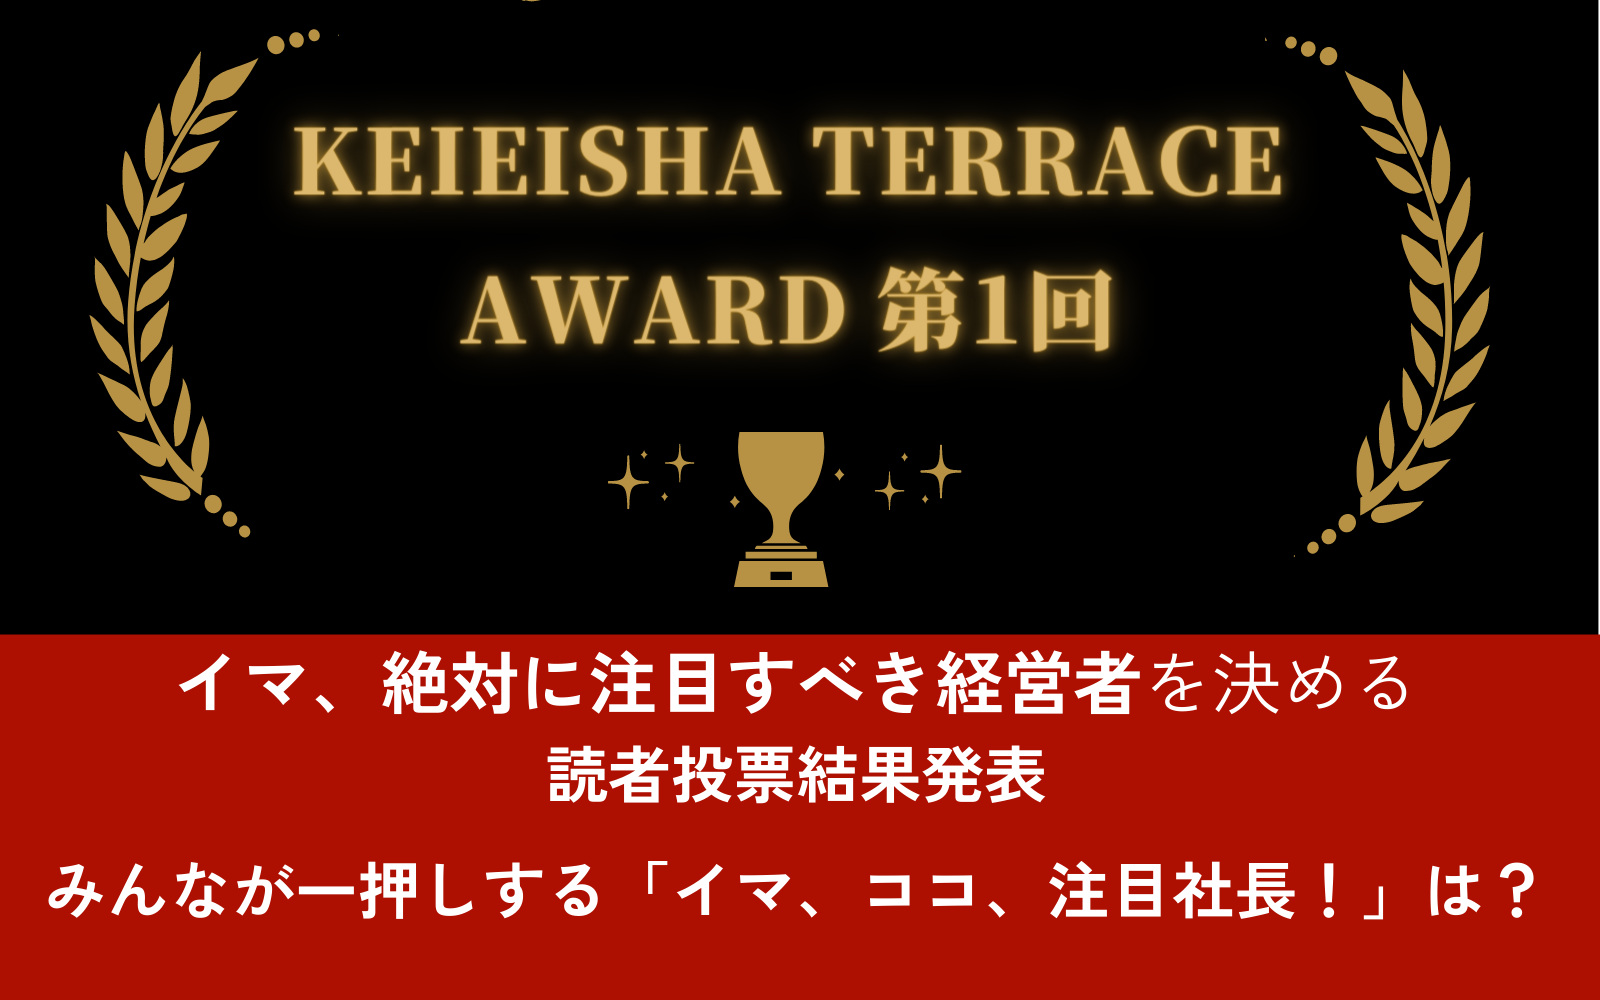 P2C Studio株式会社 代表取締役 重本隆之が、KEIEISHA TERRACE AWARD 第1回「あなたが選ぶ　今一押しのイマ、ココ、注目社長」第３位受賞